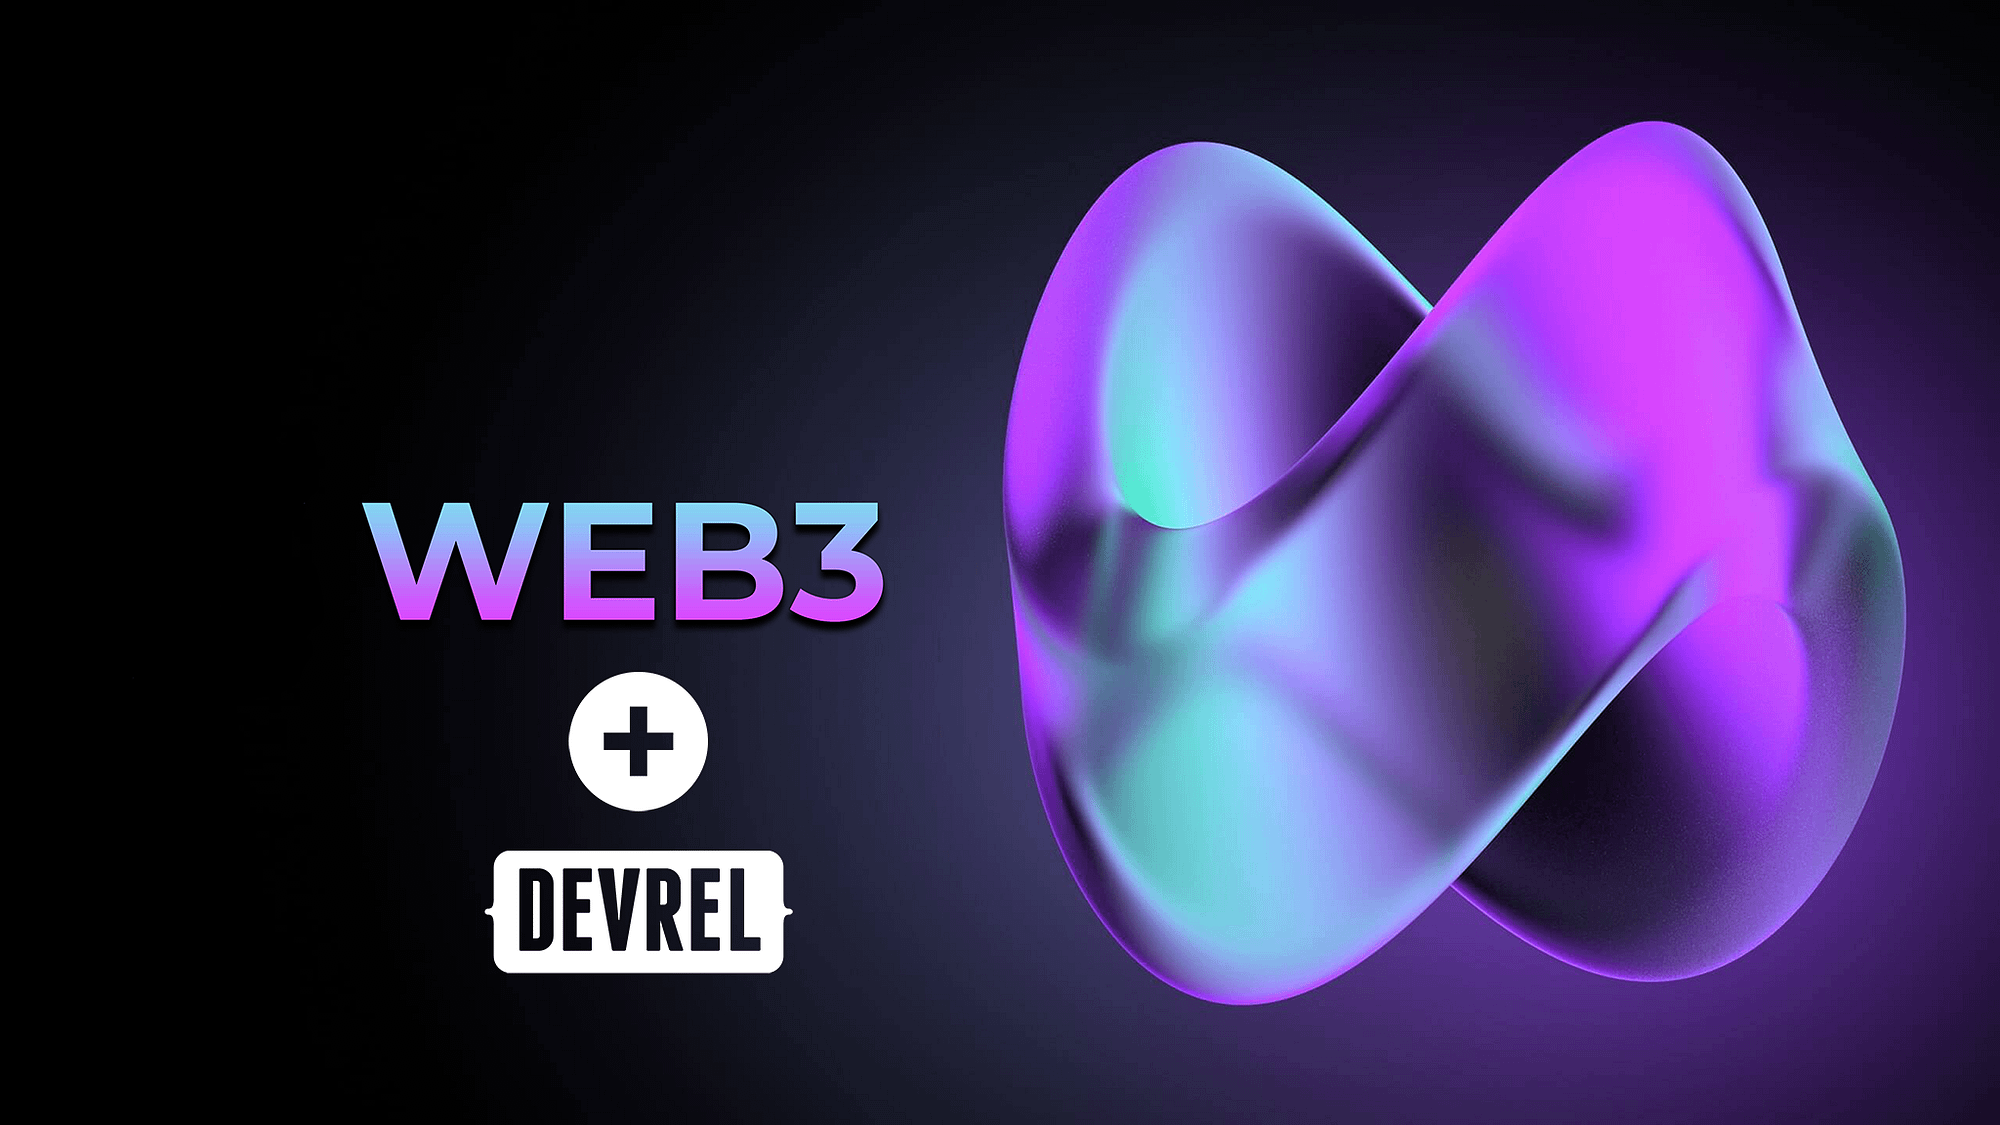 Web3 and DevRel